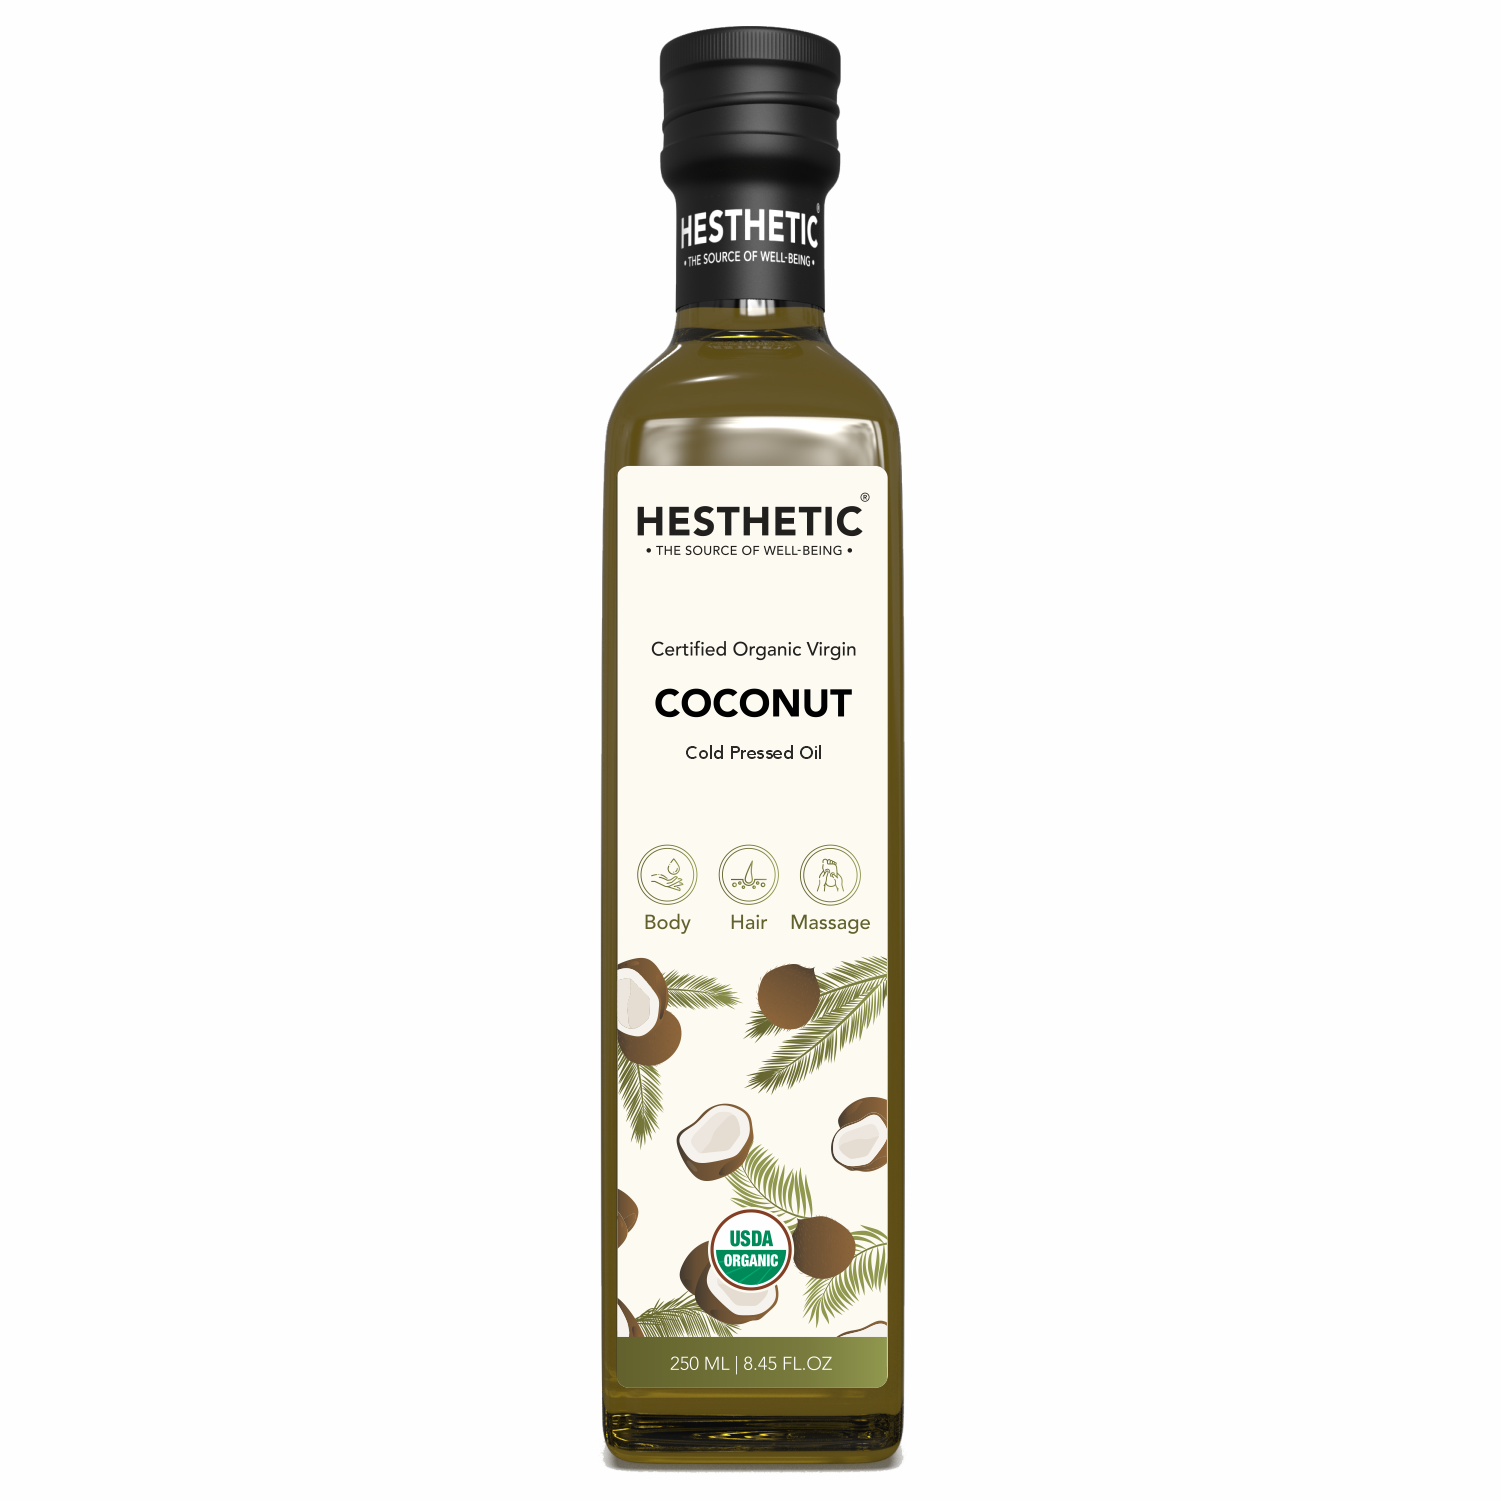 USDA Certified Organic Virgin Cold-Pressed Coconut Oil